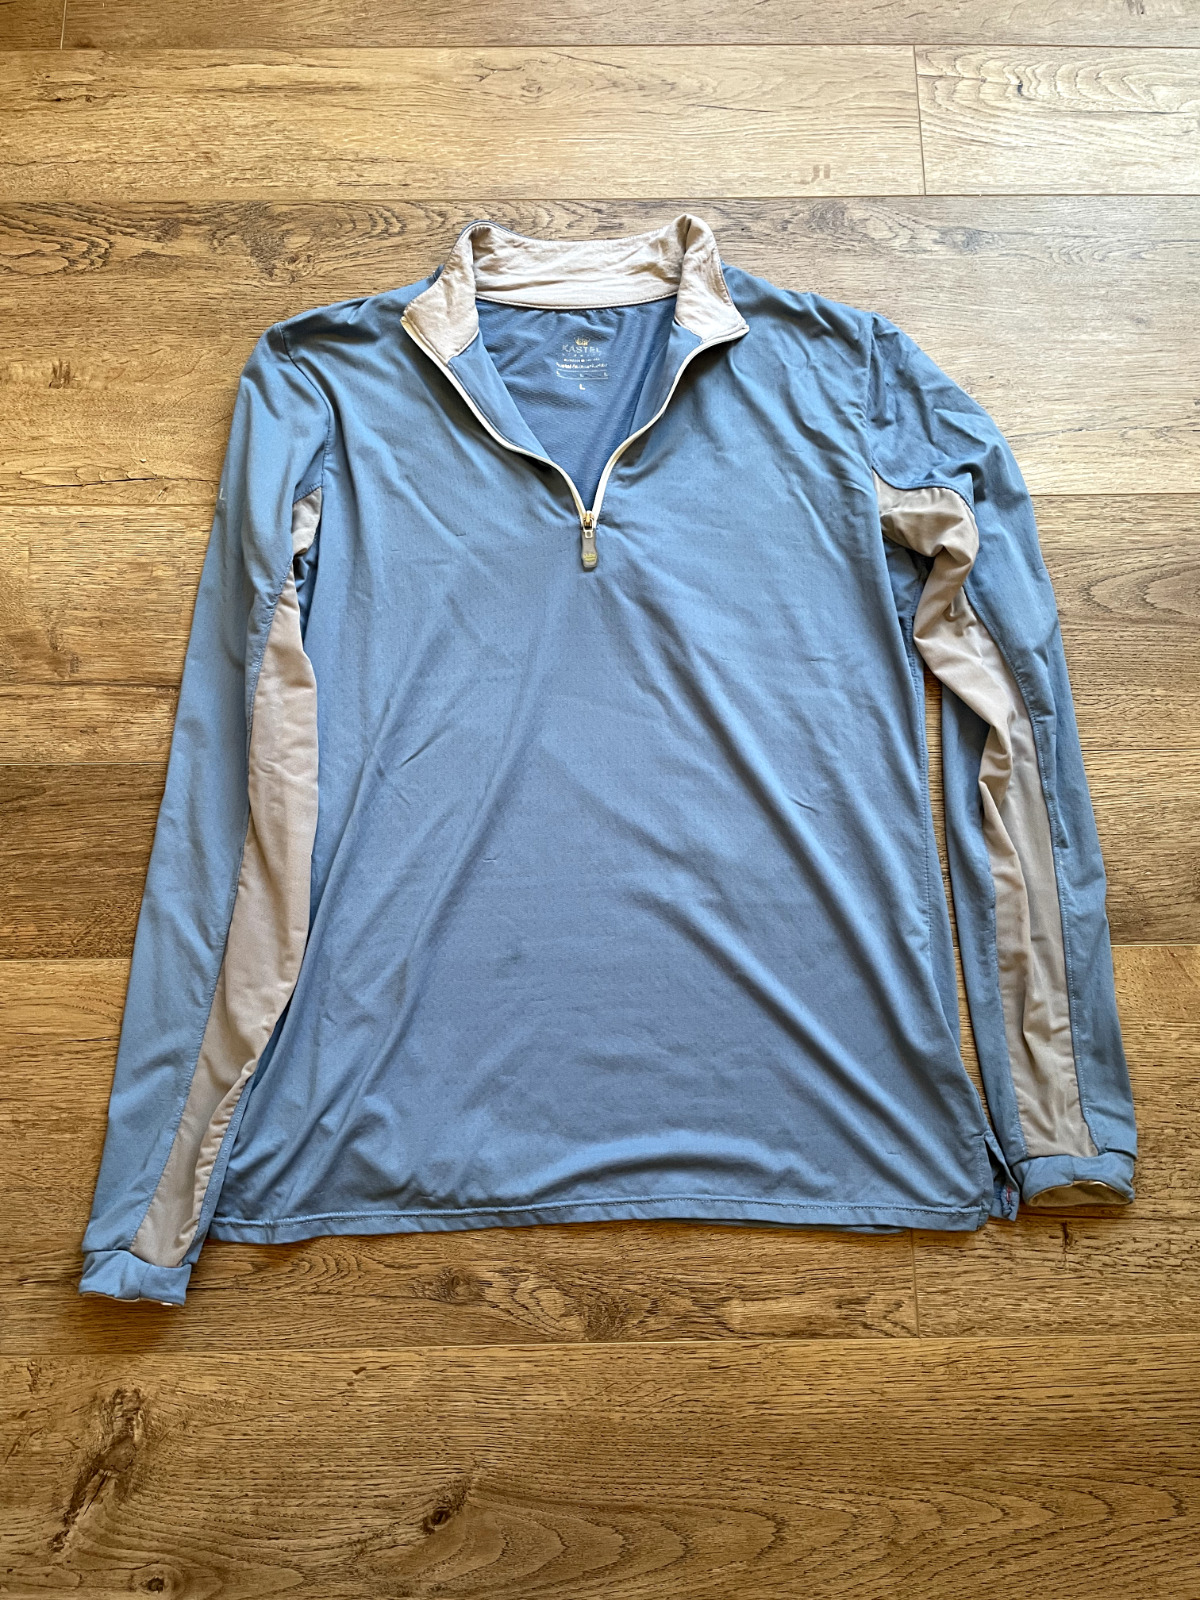 Kastel Denmark Long Sleeve 1/4 Zip Sun Shirt Sz L Large Blue